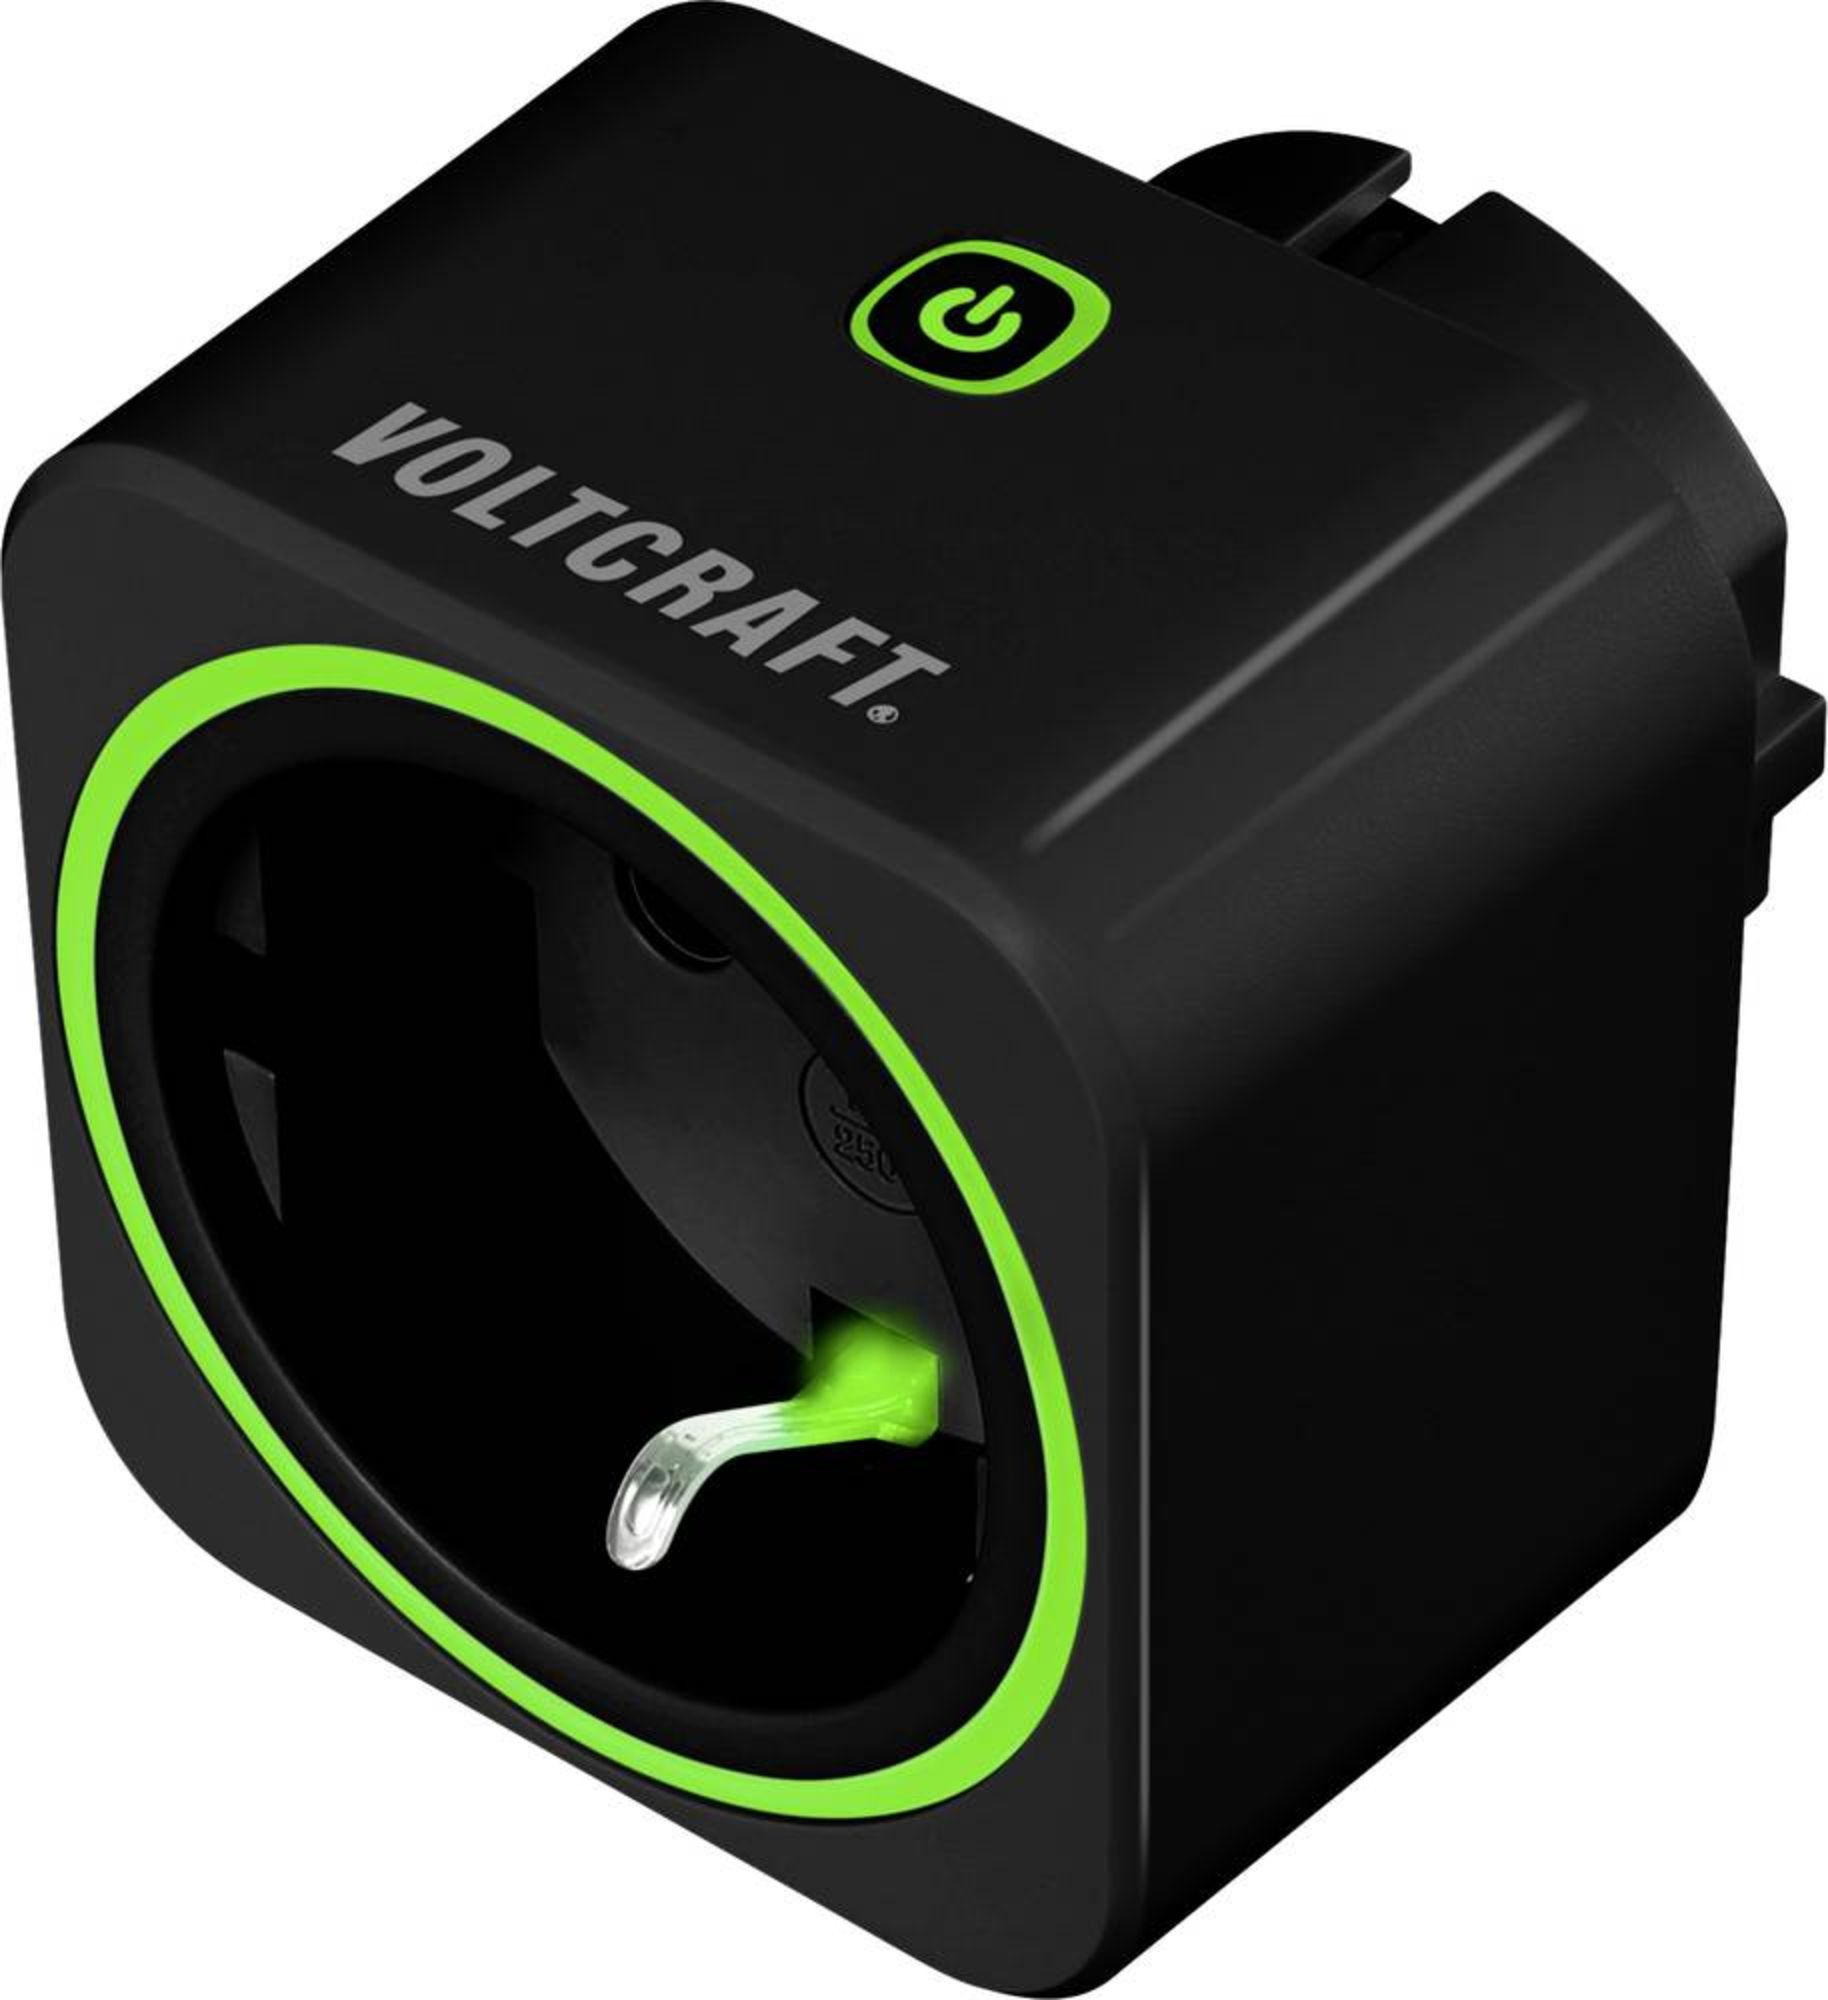 VOLTCRAFT SEM6000 BLACK Energiekosten-Messgerät Bluetooth